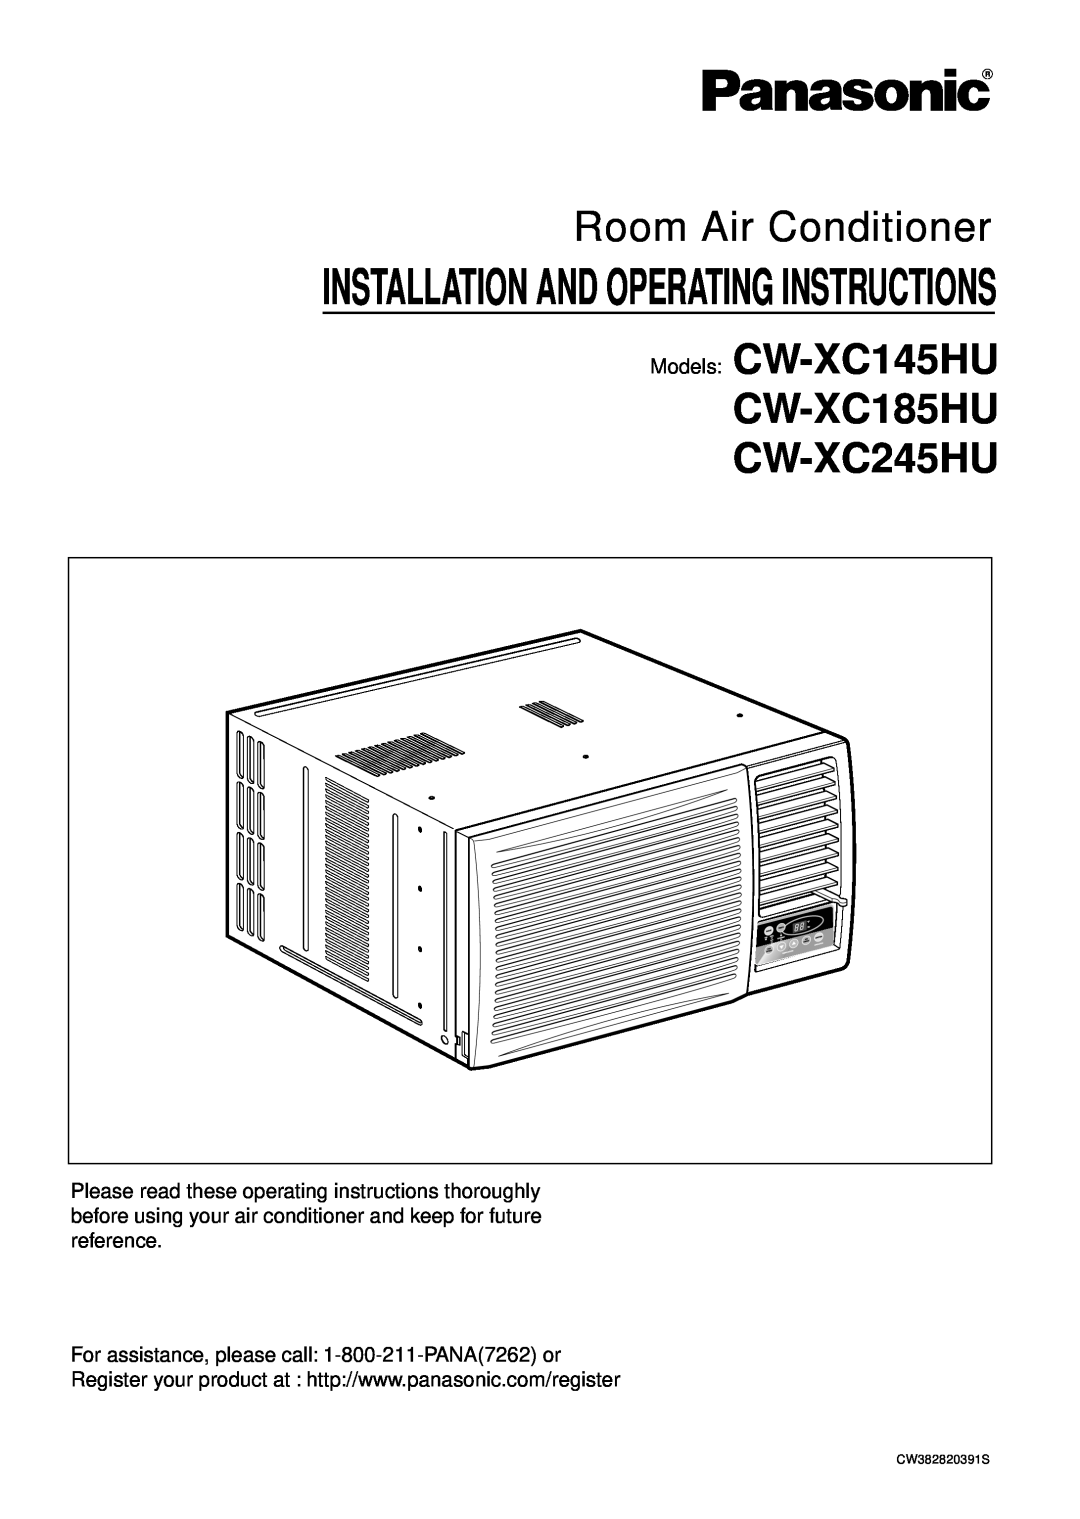 Panasonic CW-XC185HU, CW-XC145HU, CW-XC245HU manual Installation And Operating Instructions, Room Air Conditioner 